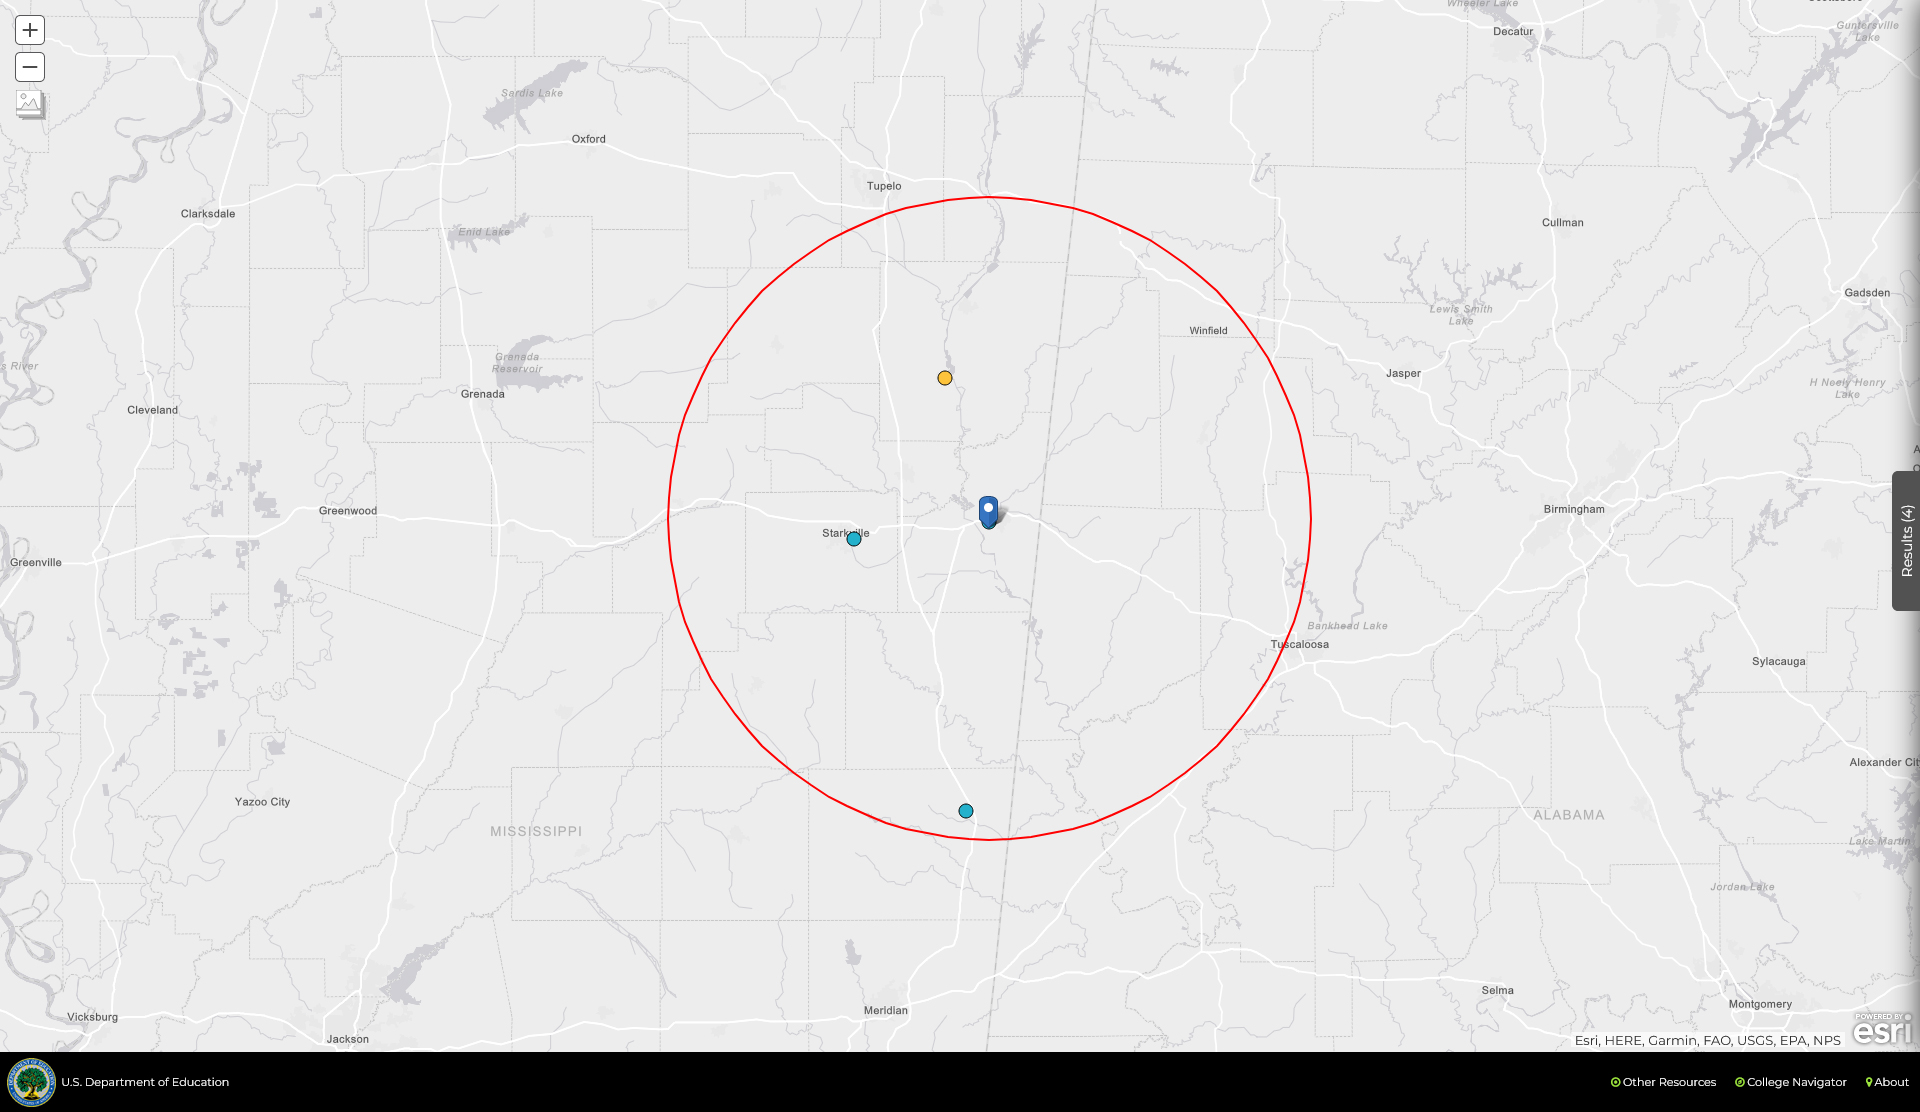 Map: 60 mile radius around MUW shows three colleges